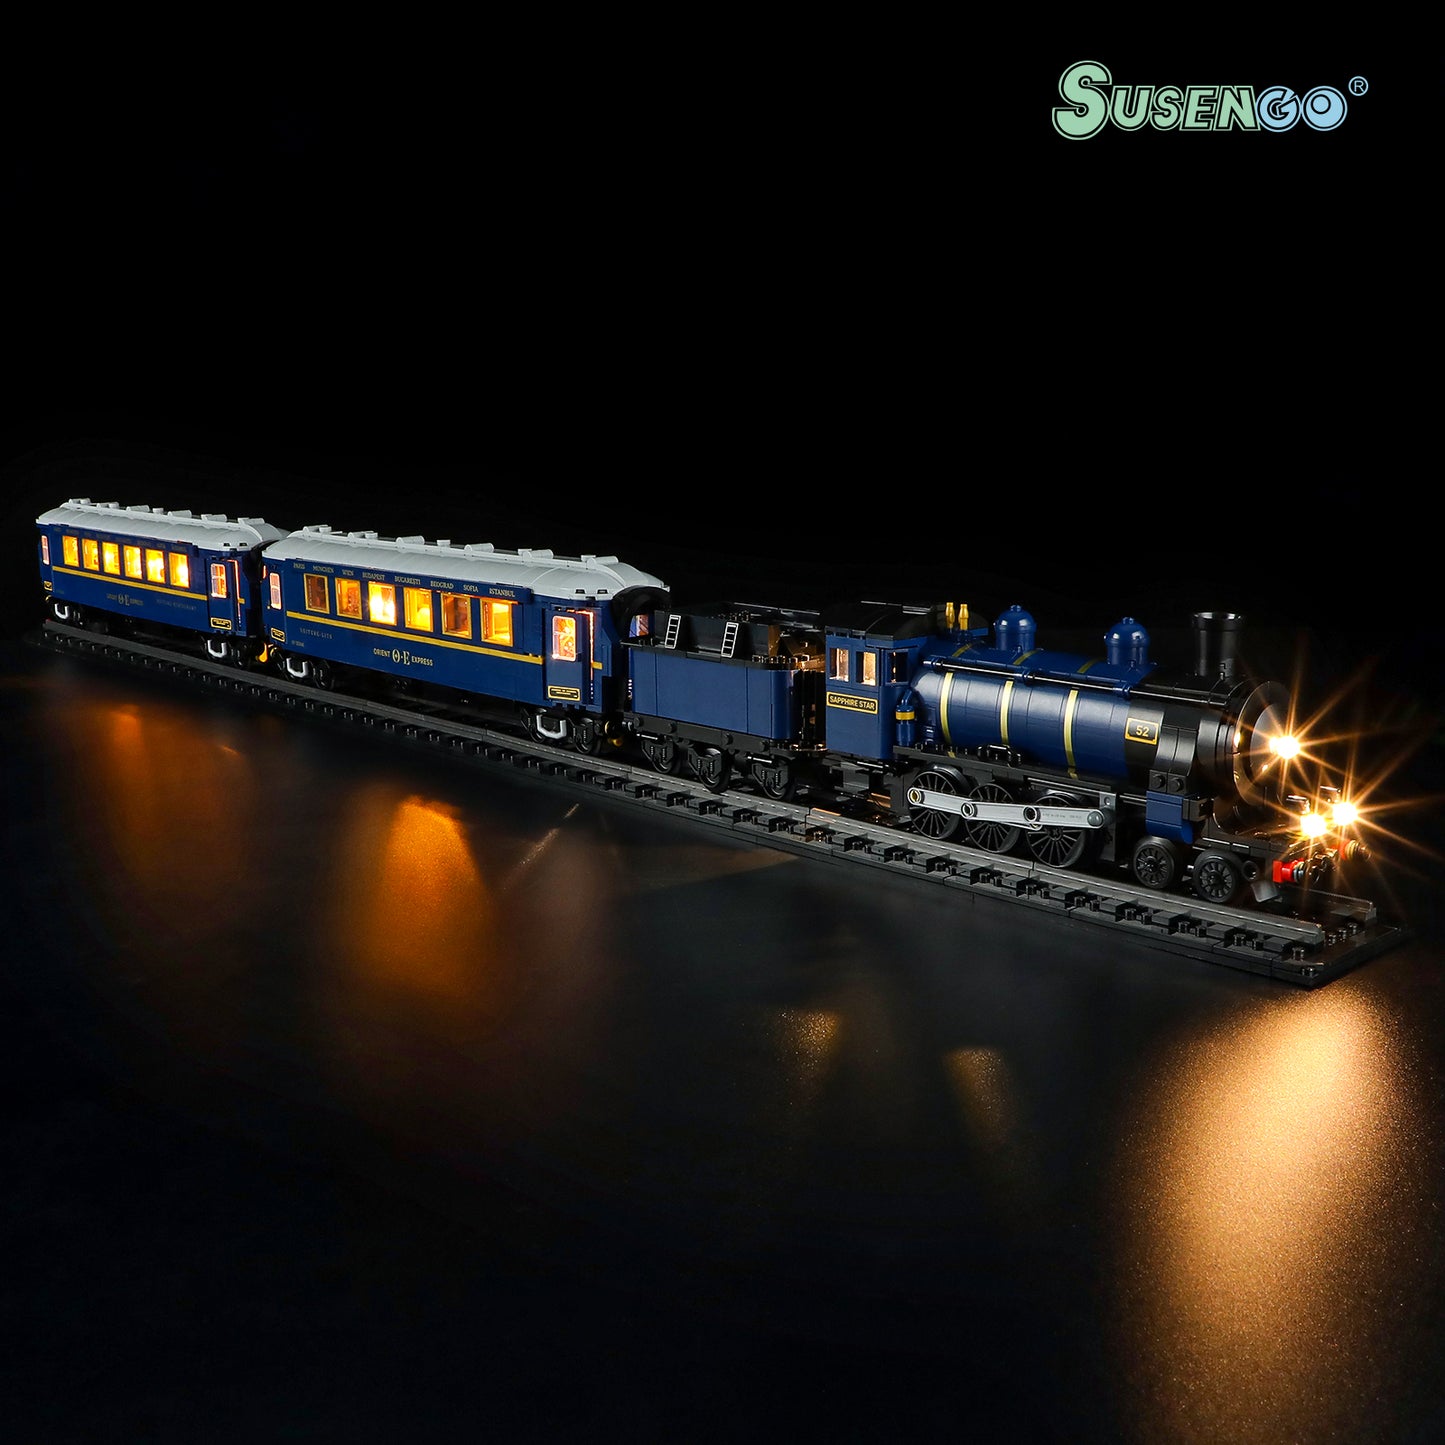 Susengo Express Train Toy